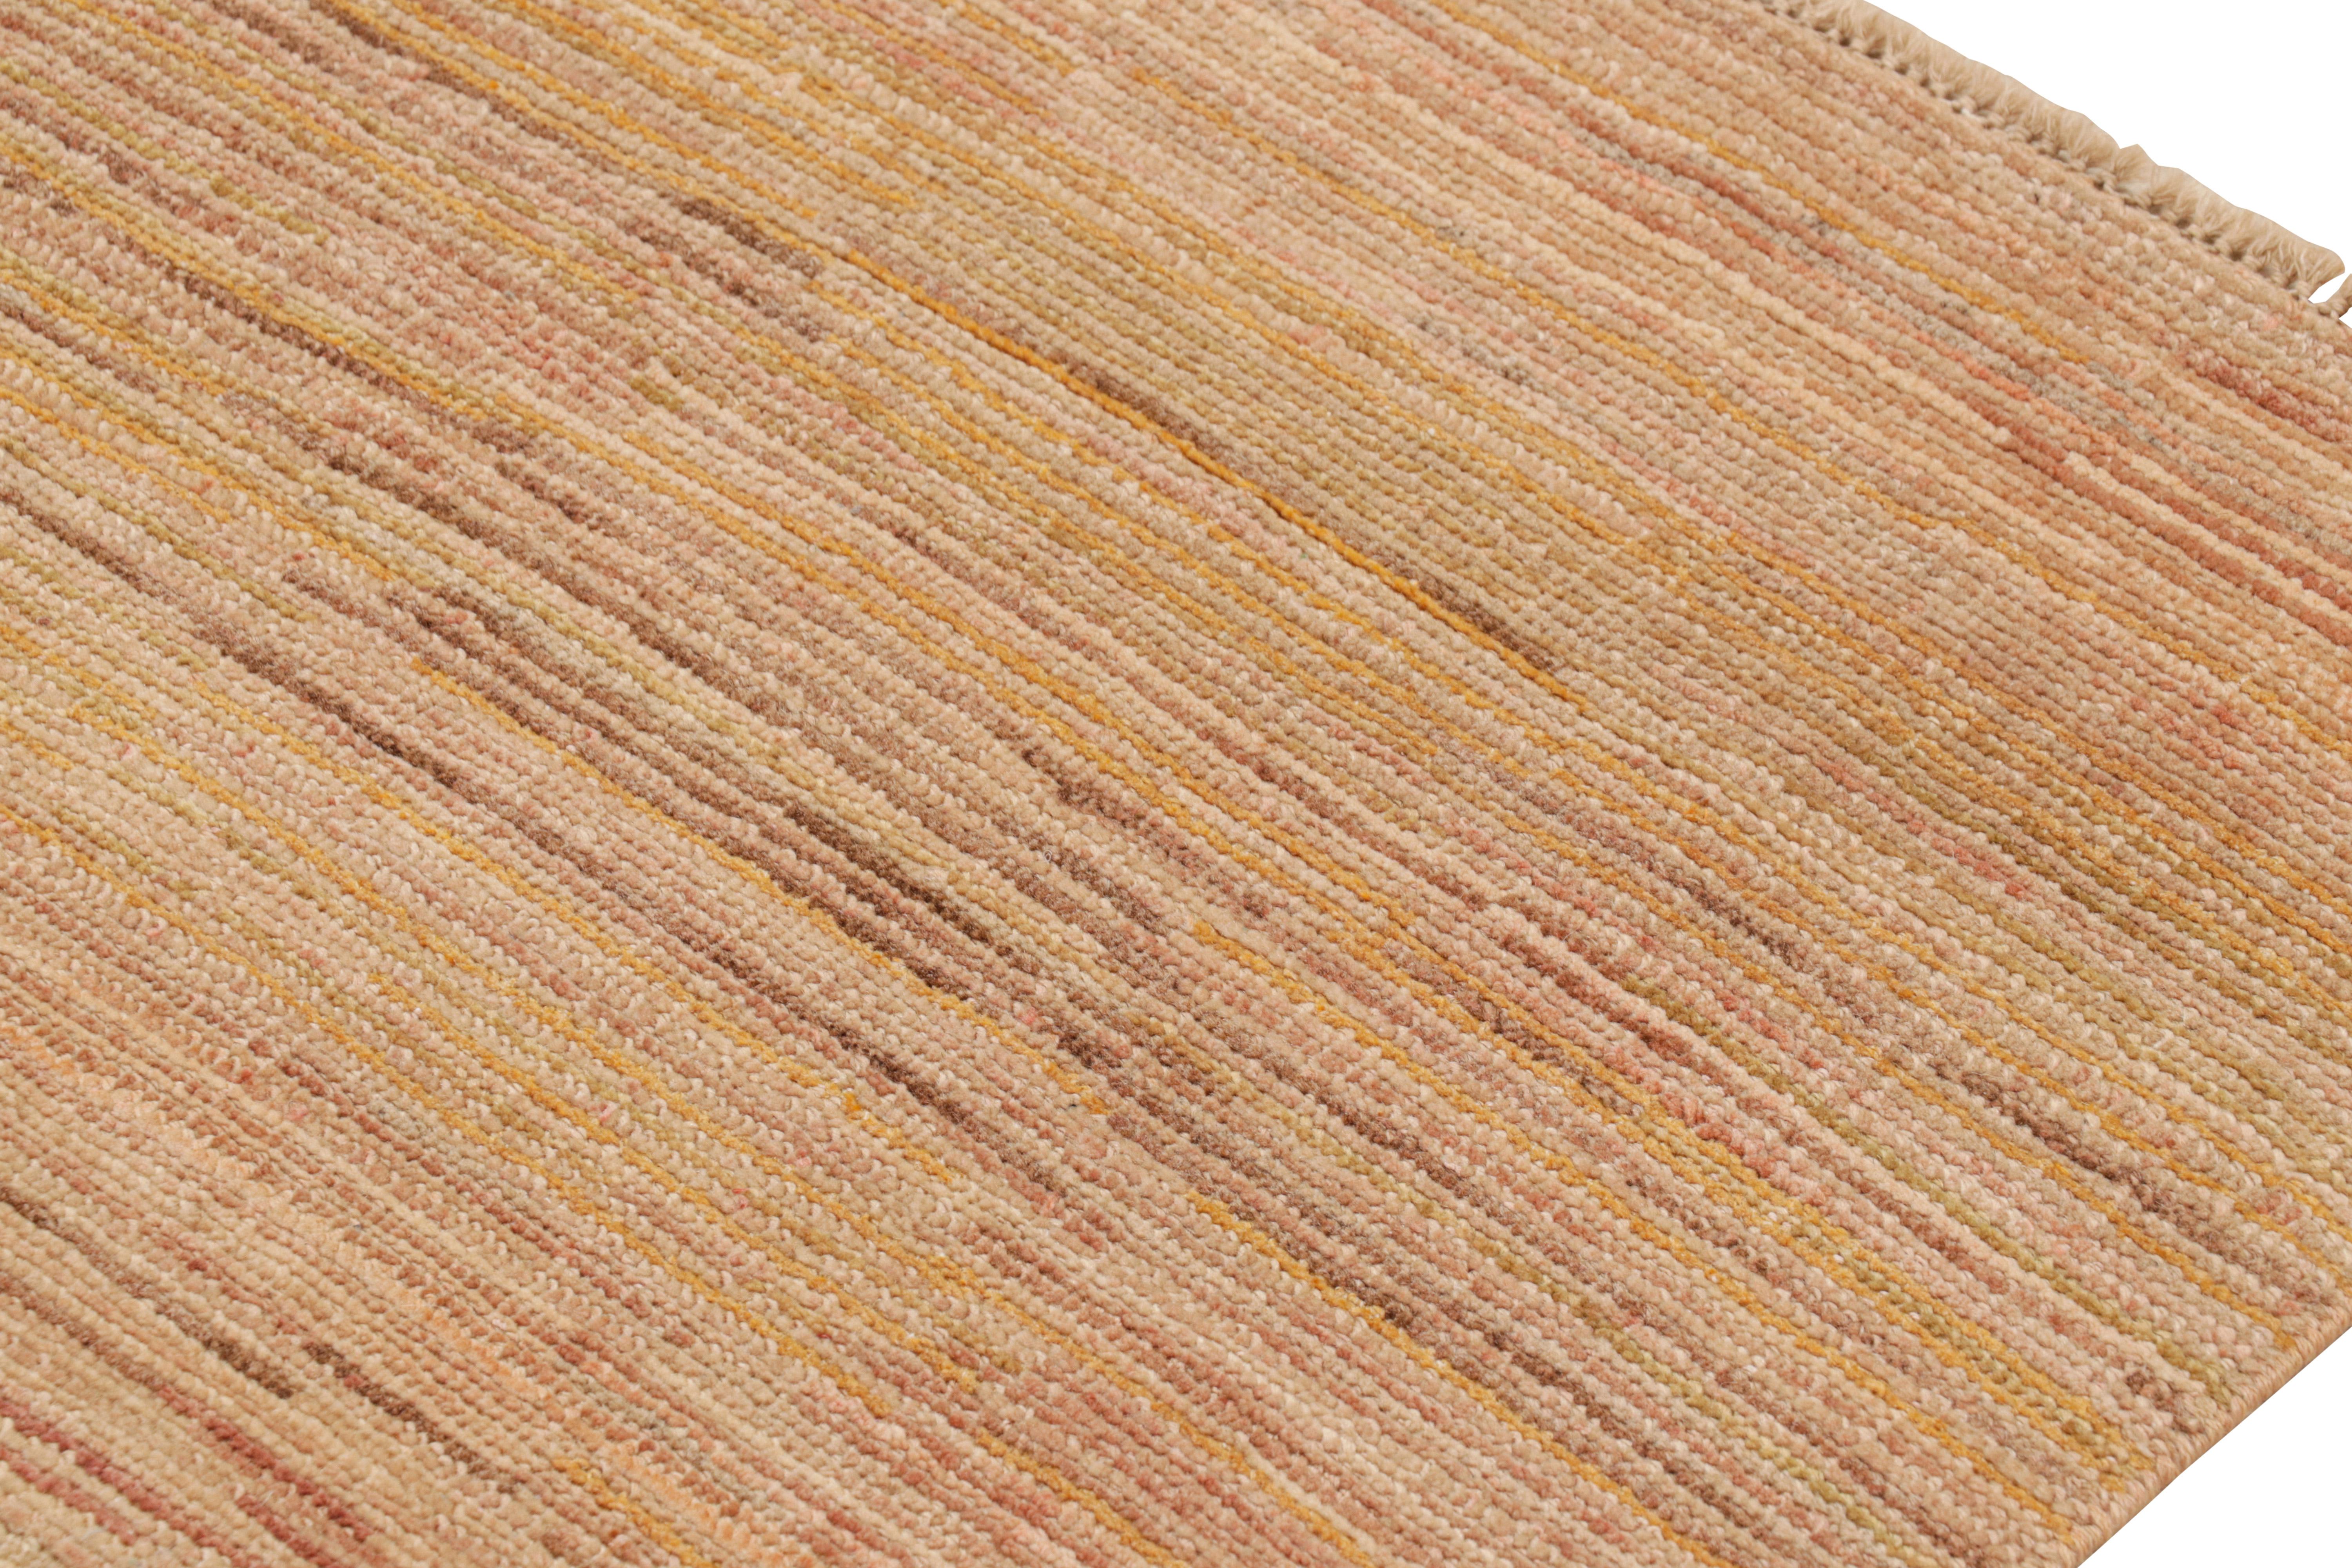 Rug & Kilim's Modern Textural Rug in Peach Tones, Stripes and Striae (tapis à texture moderne dans les tons pêche, à rayures et à bandes) Neuf - En vente à Long Island City, NY